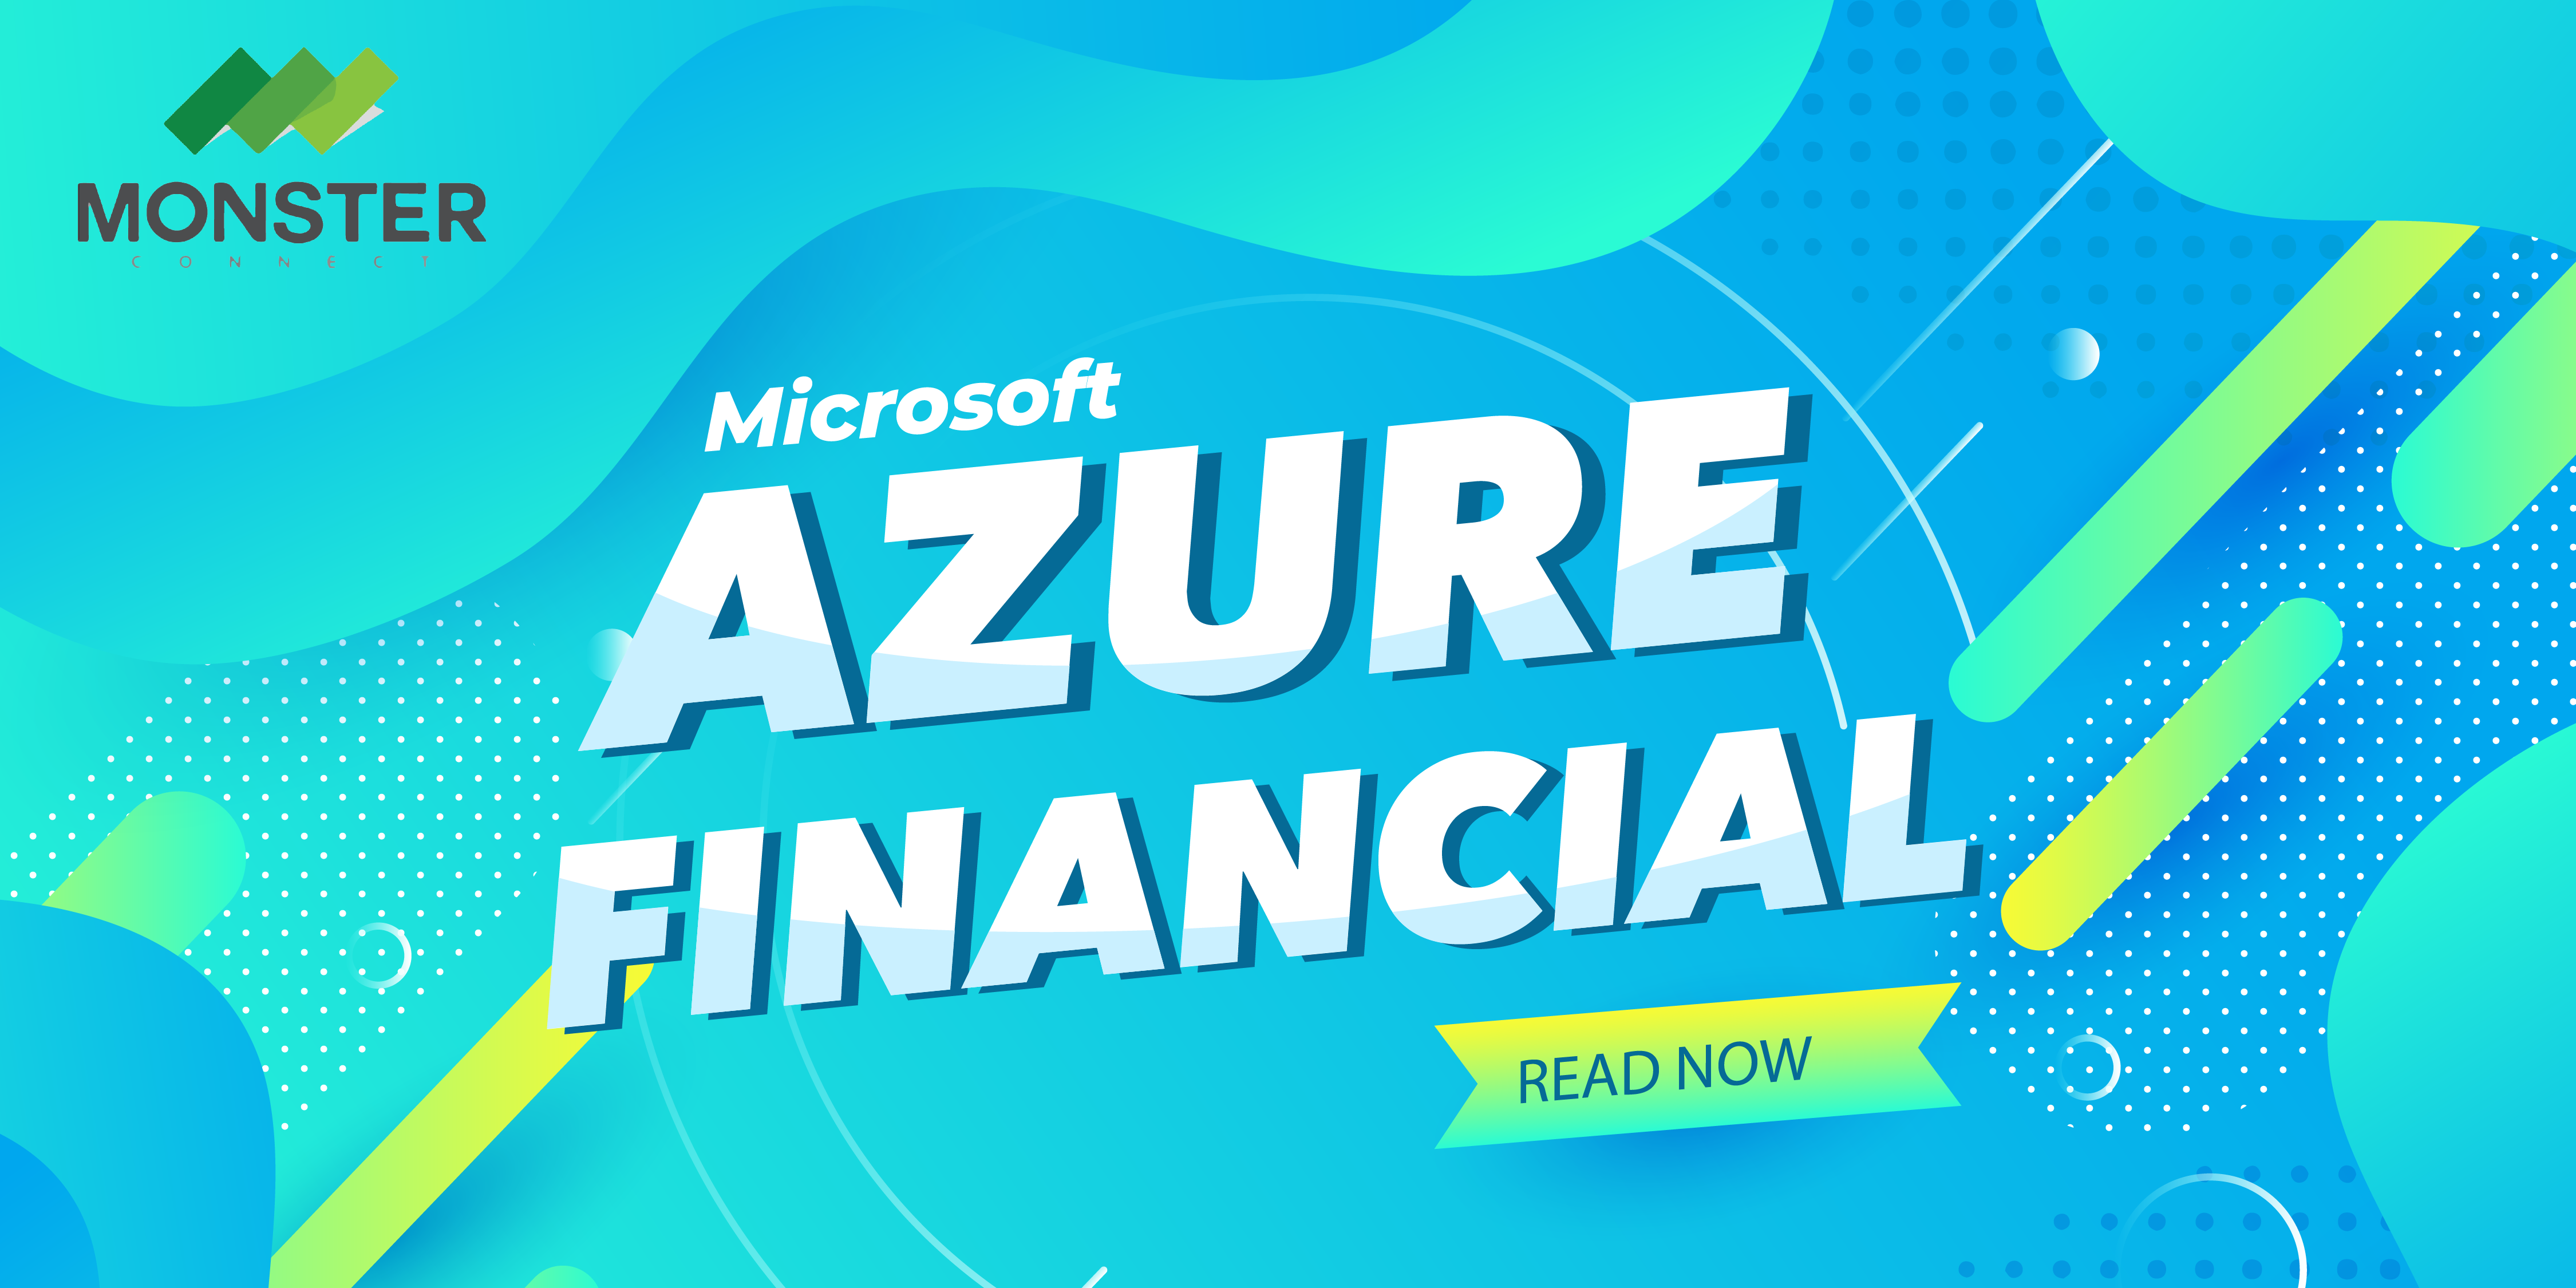 Azure financial